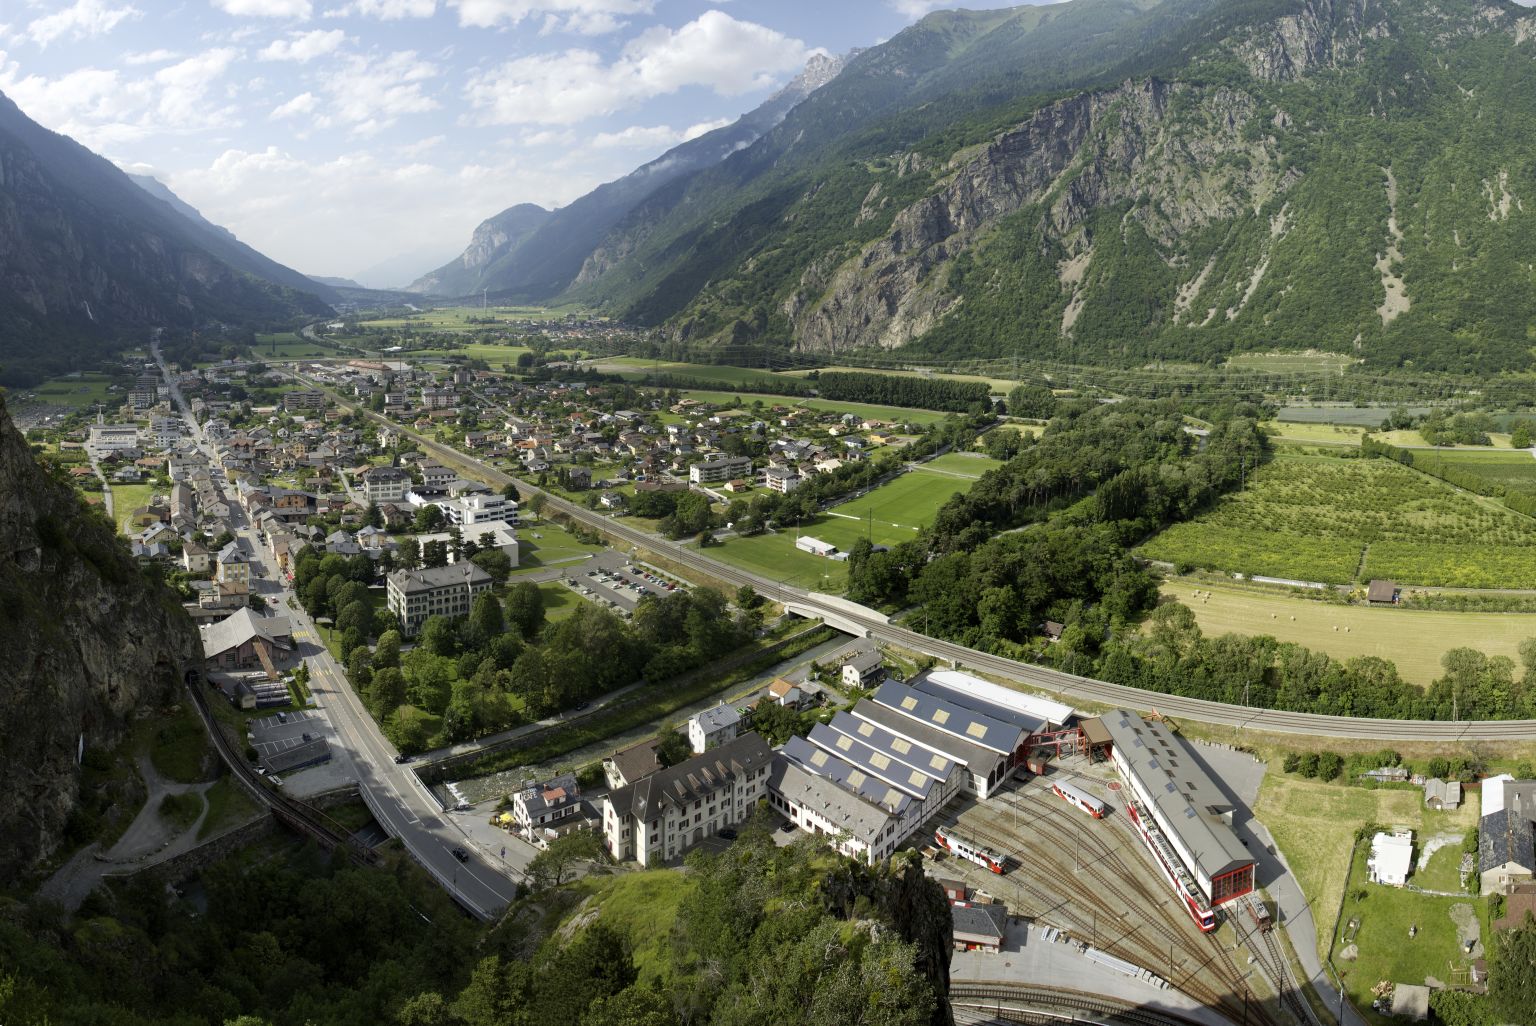 The village of Vernayaz seen from above with the Cascade de la Pissevache visible. Valais, Switzerland